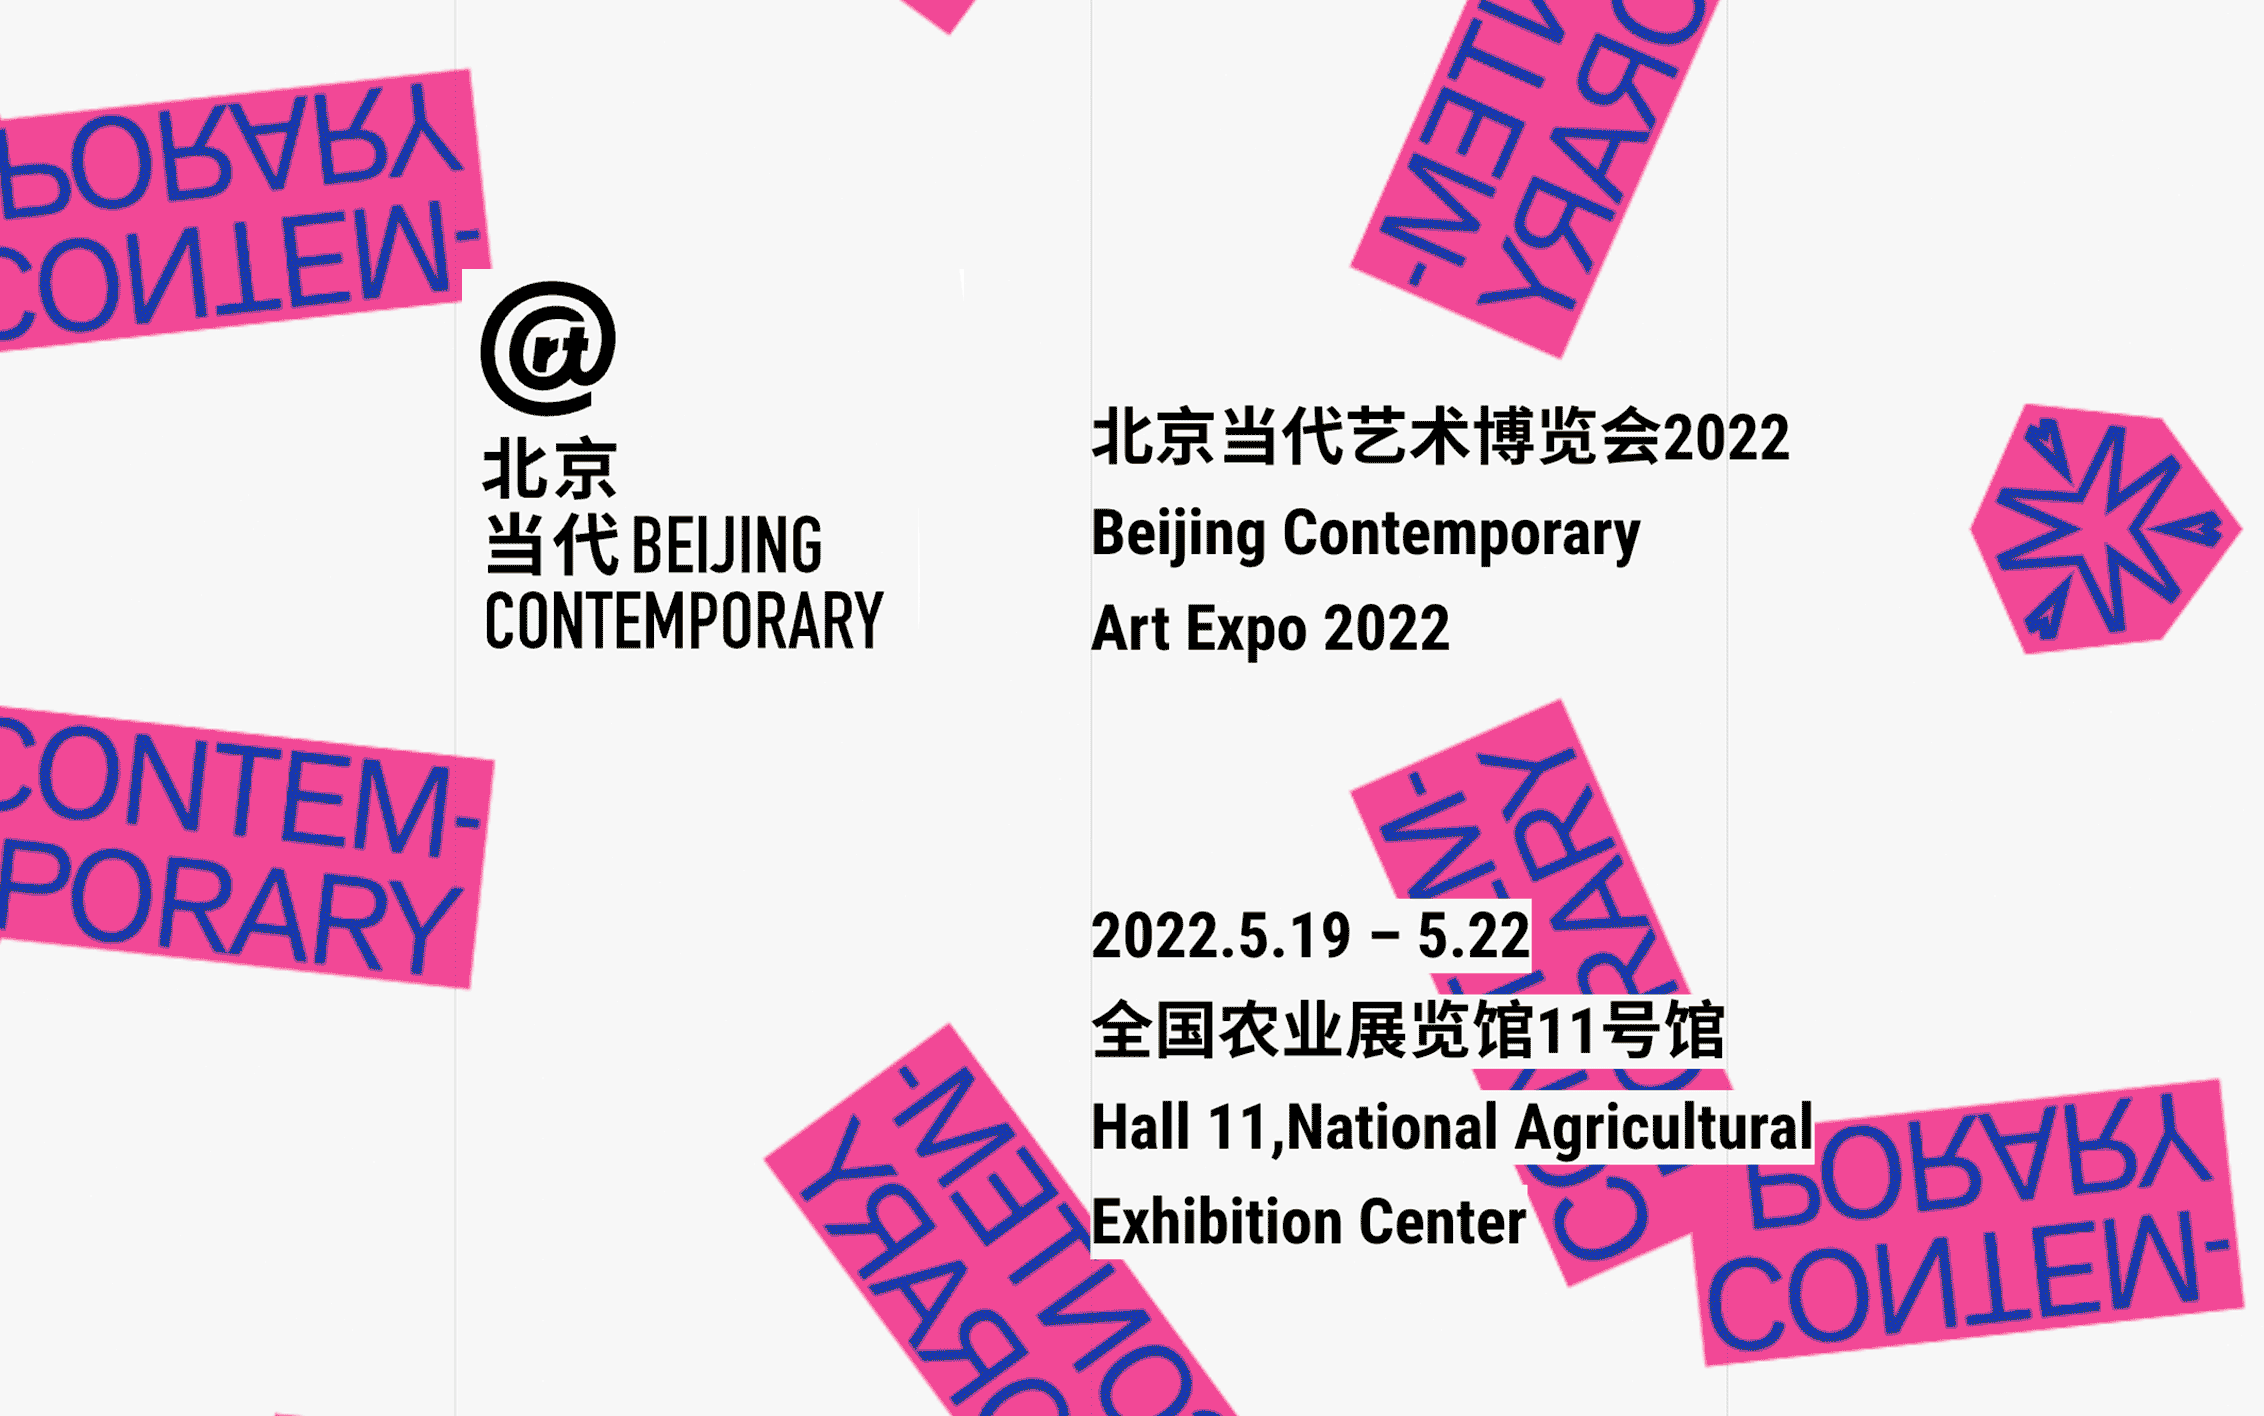 Contemporary art art fair, Beijing Contemporary Art Expo 2022 at Beijing Commune, China